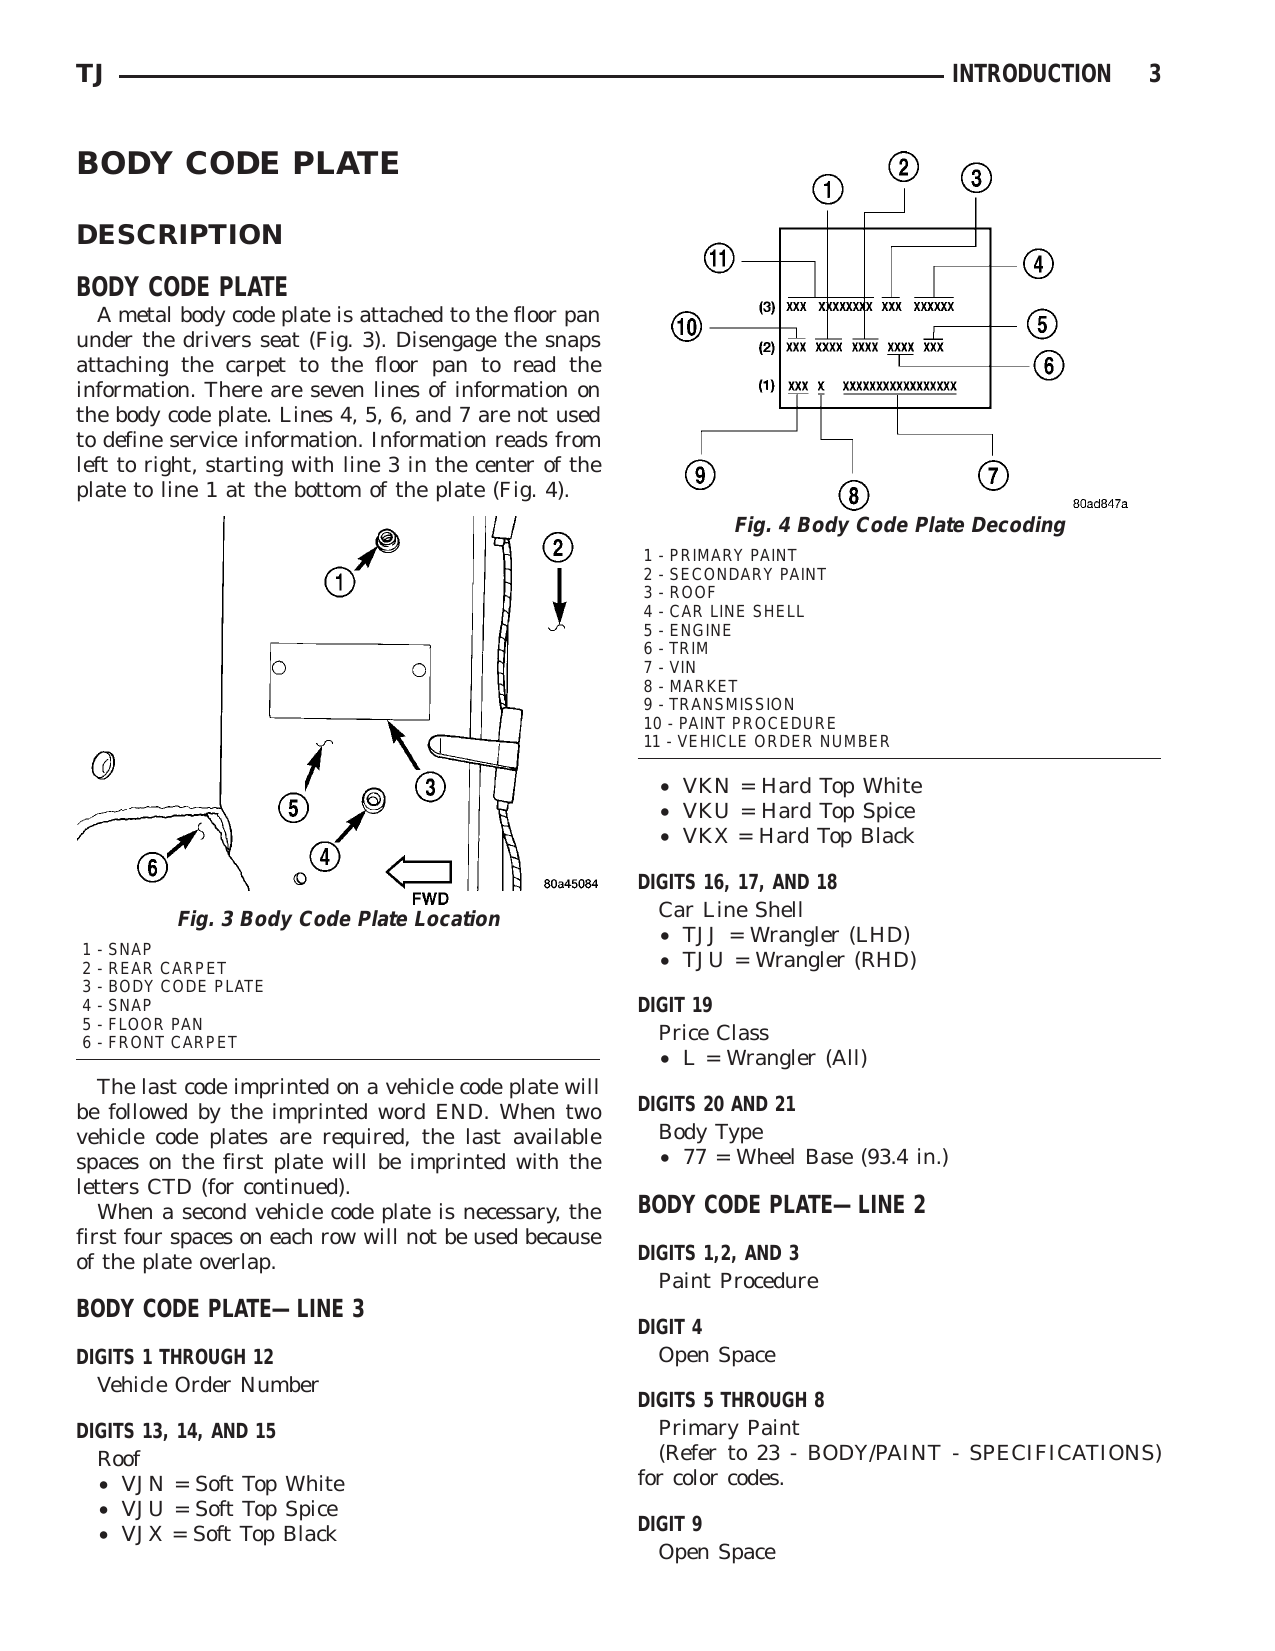 2003 Jeep Wrangler shop manual Preview image 4